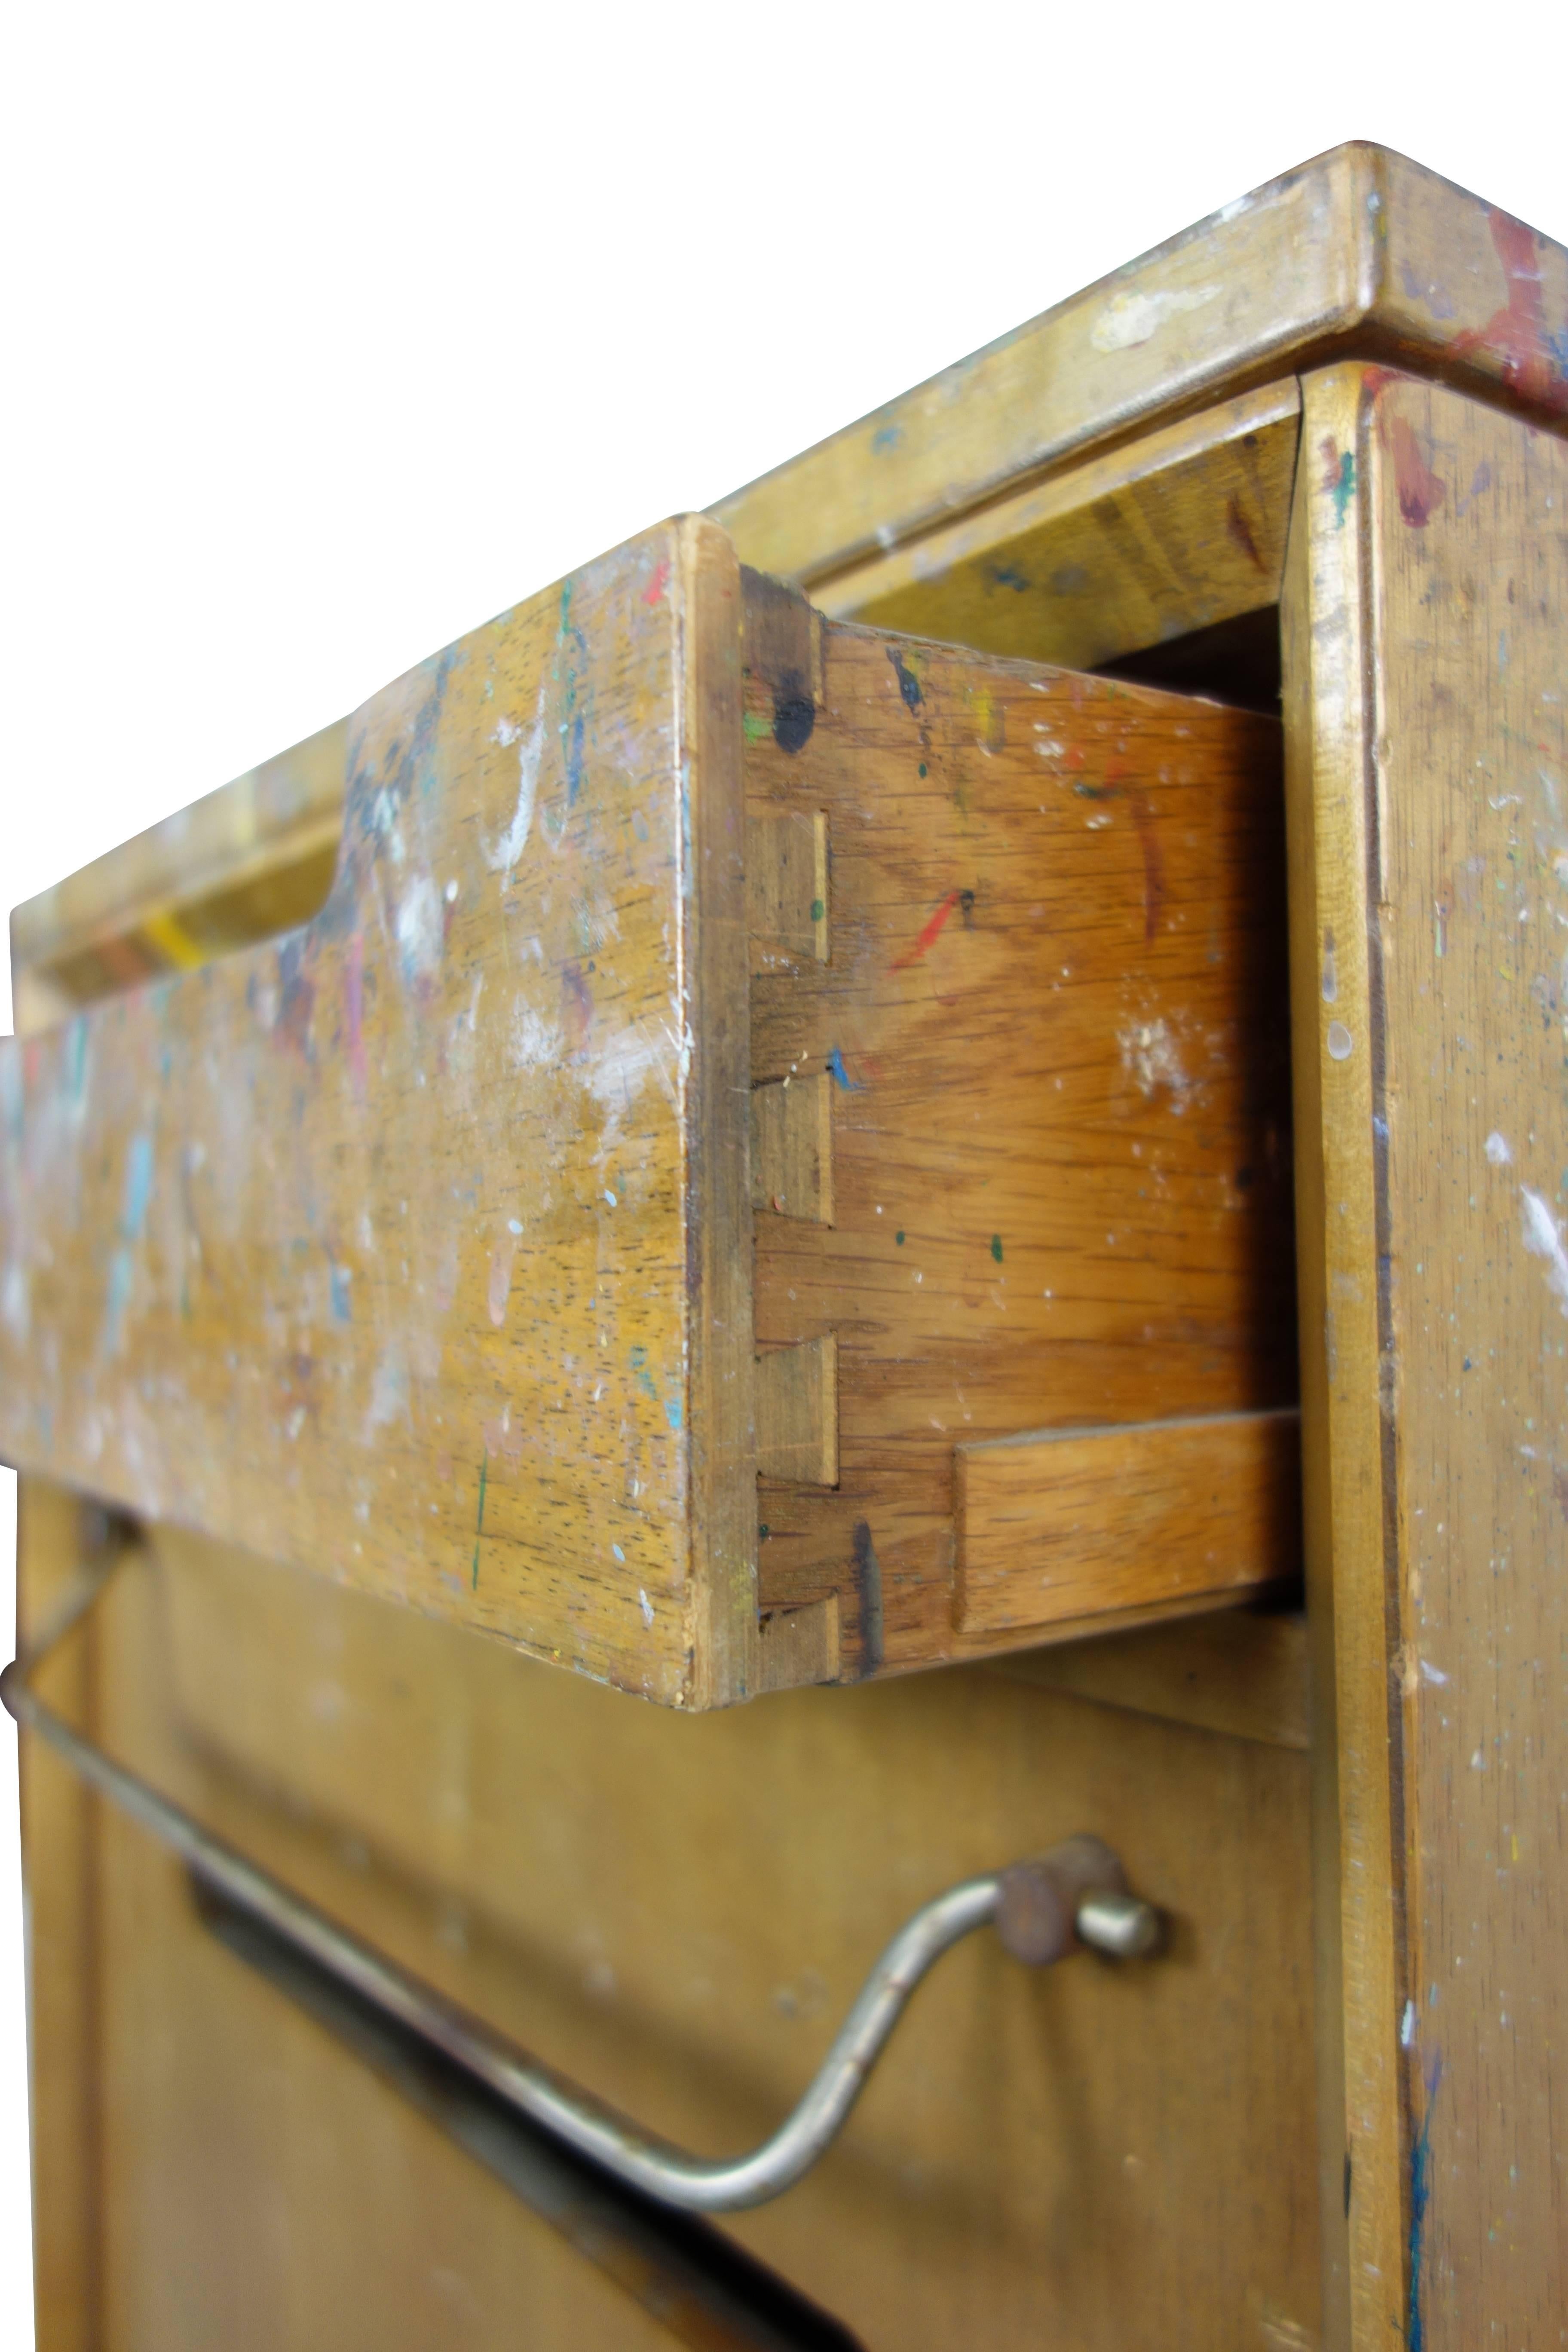 20th Century Paint Splattered Cabinet from an Artist Studio